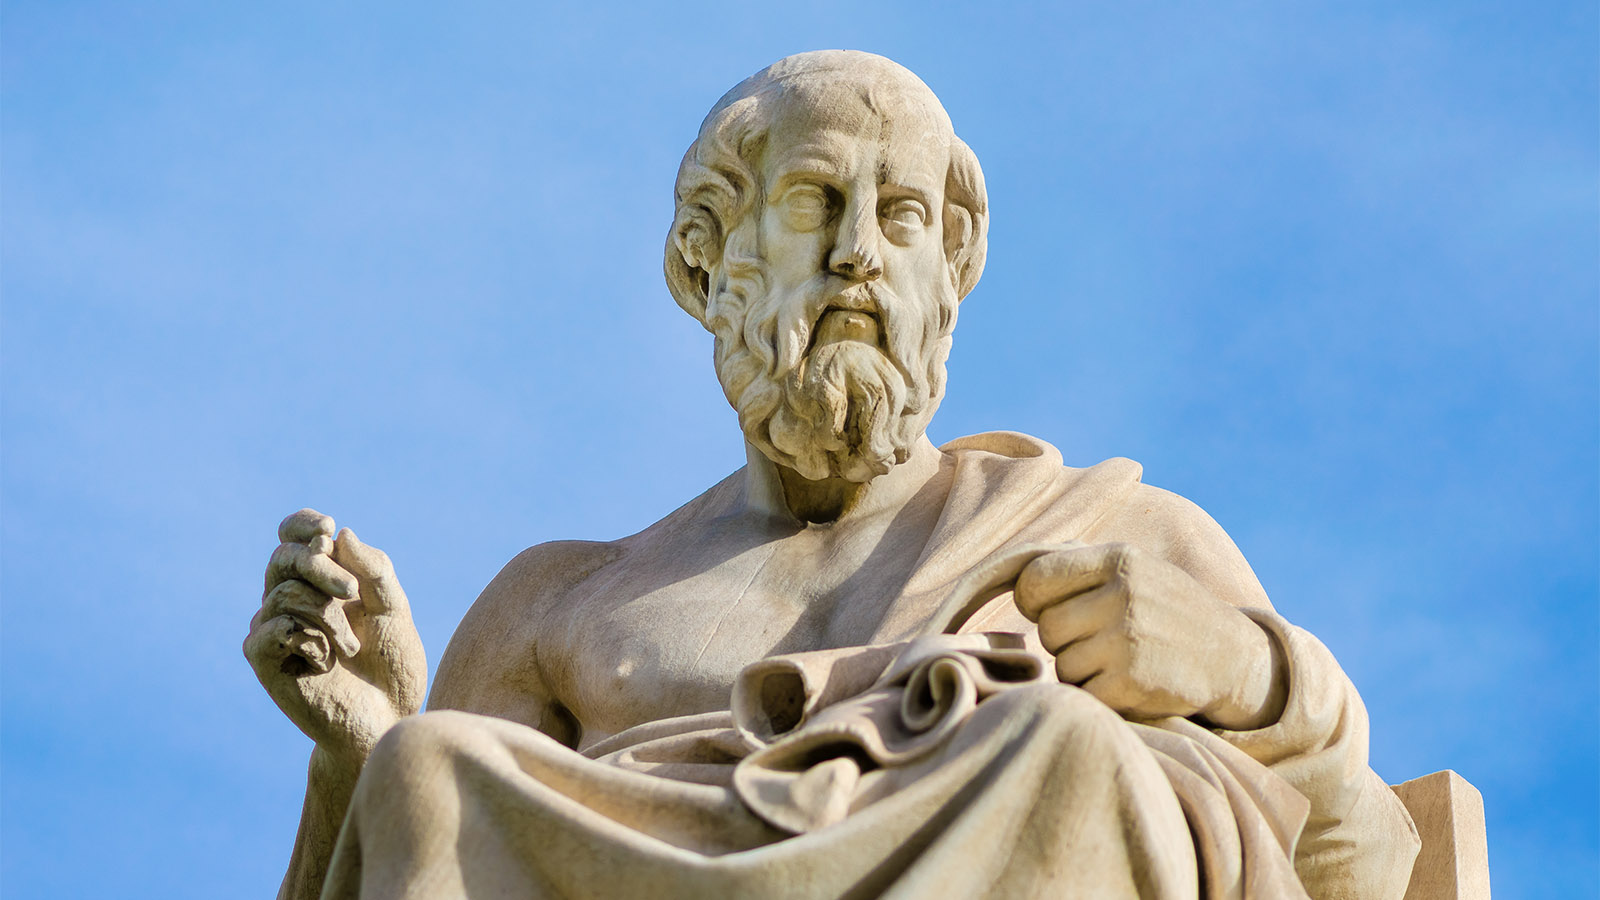 Plato (Image: Shutterstock)